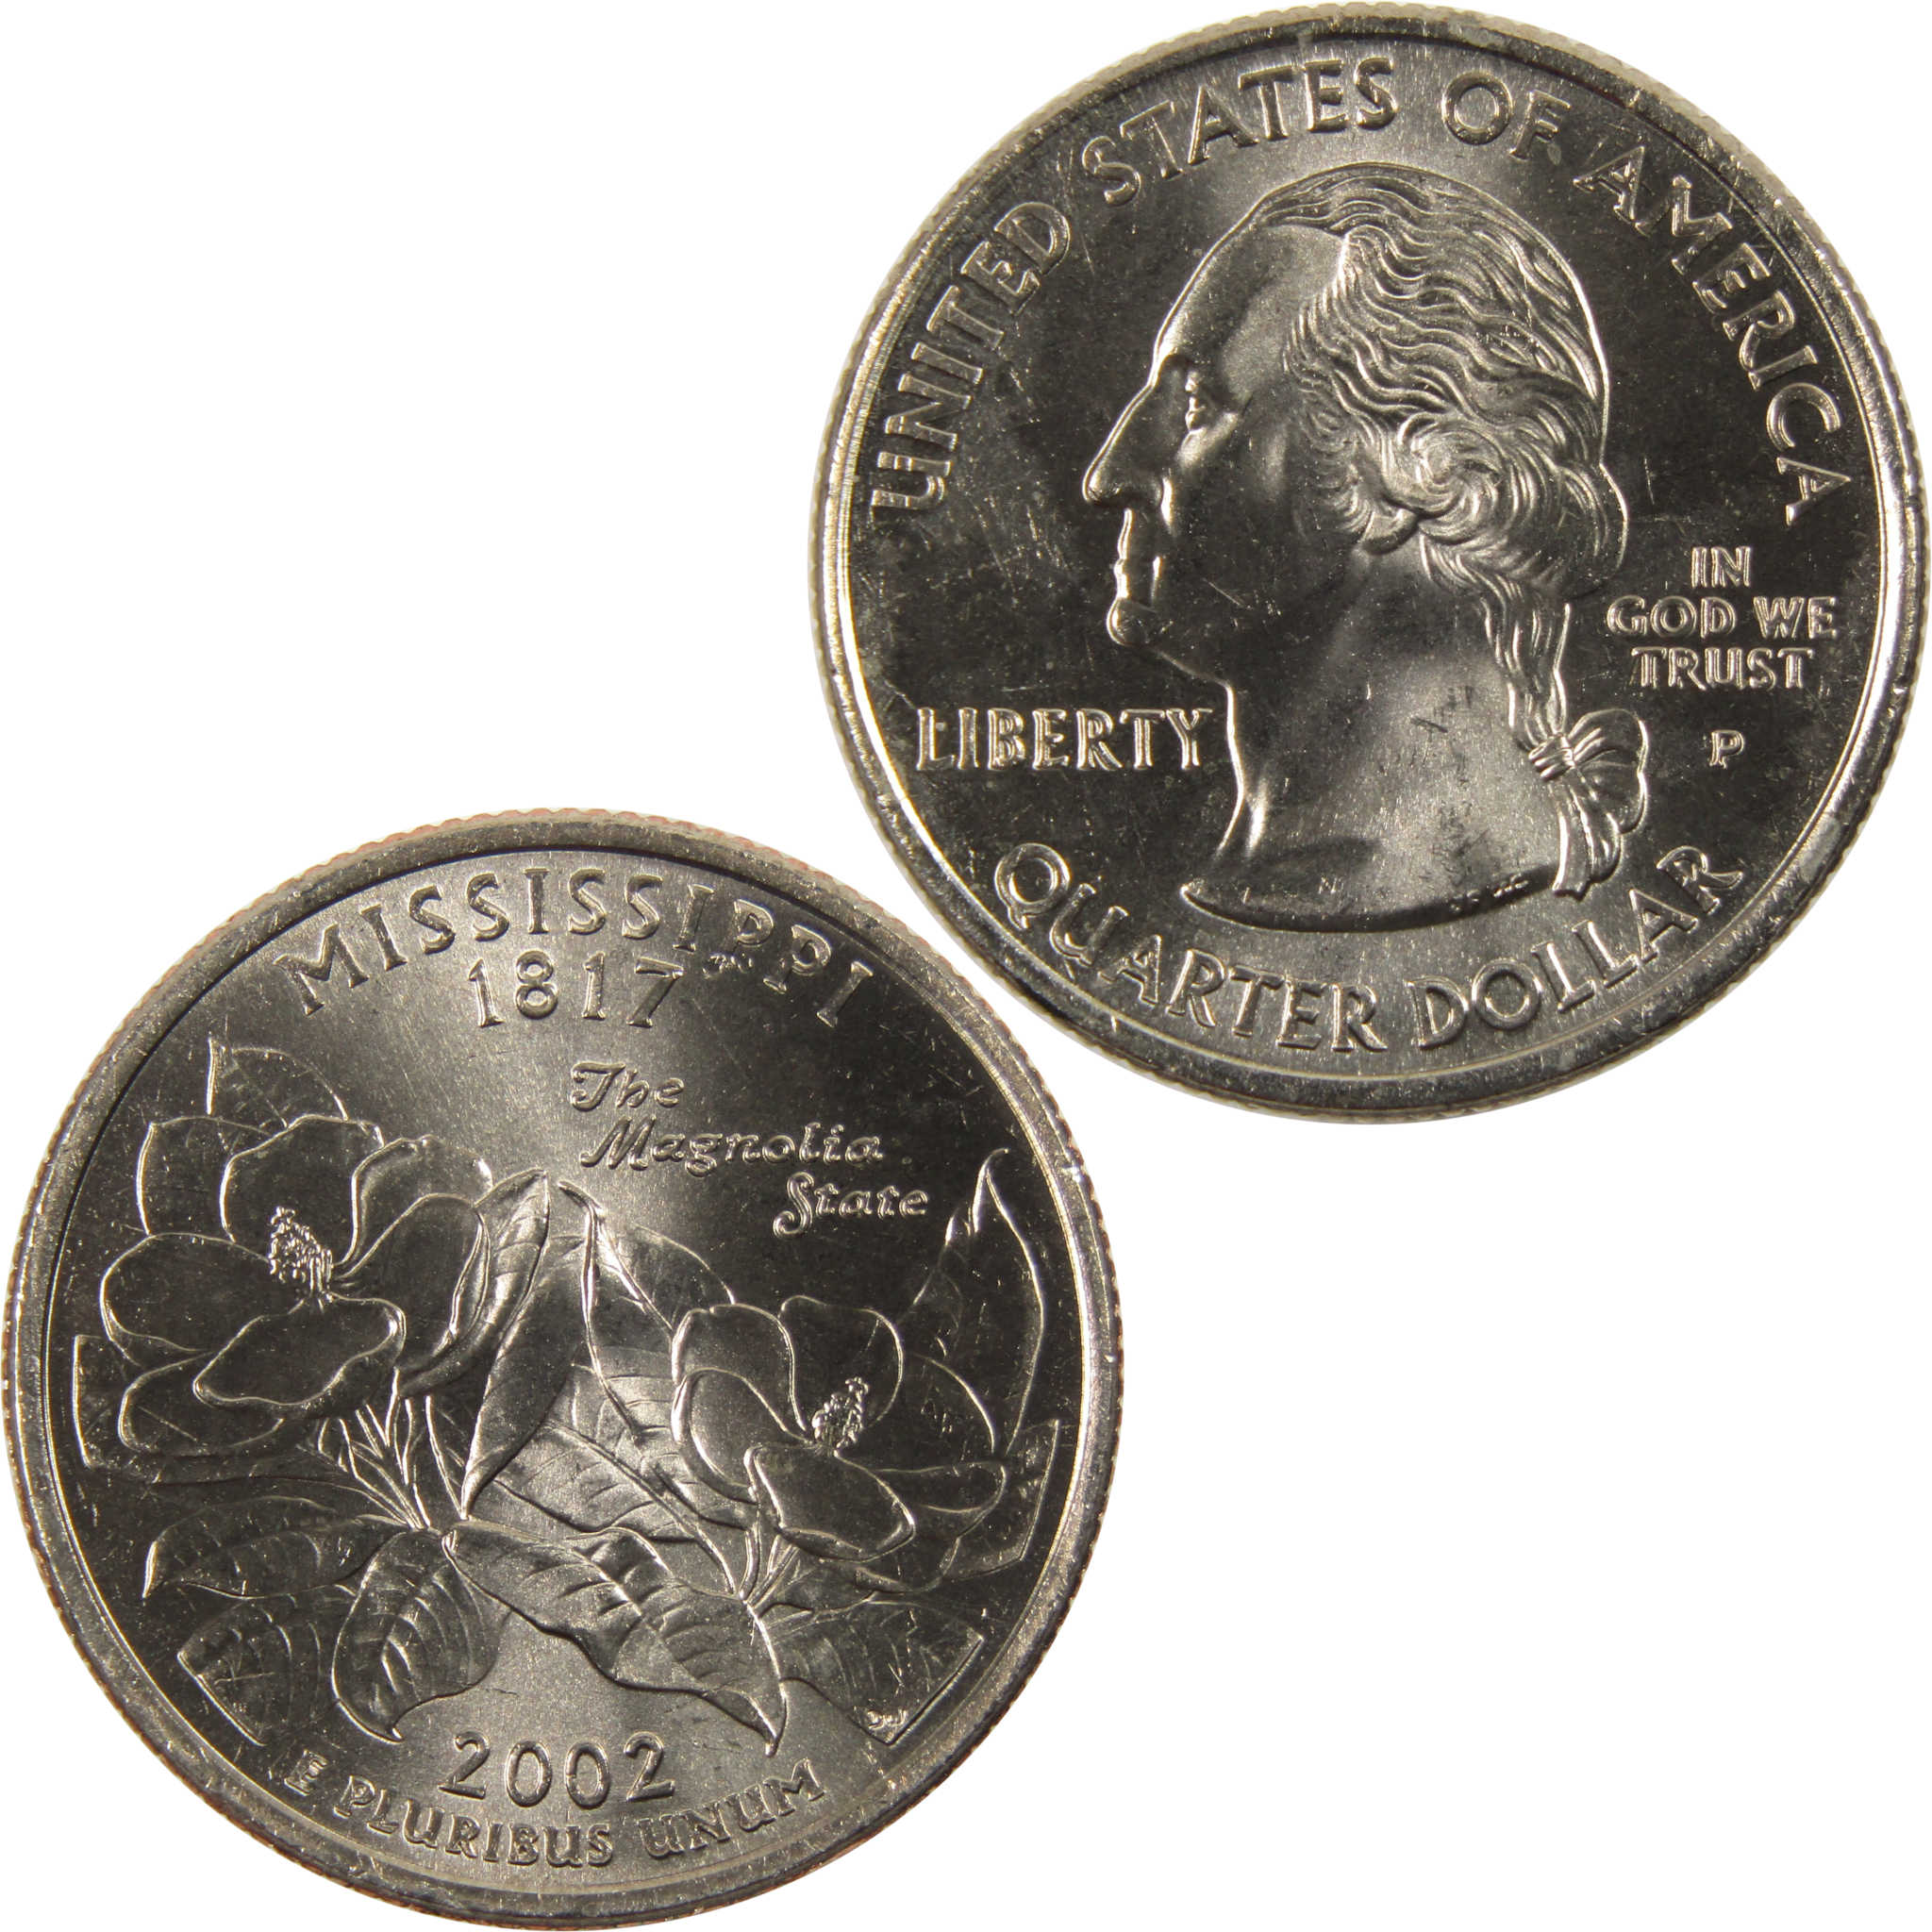 2002 P Mississippi State Quarter BU Uncirculated Clad 25c Coin